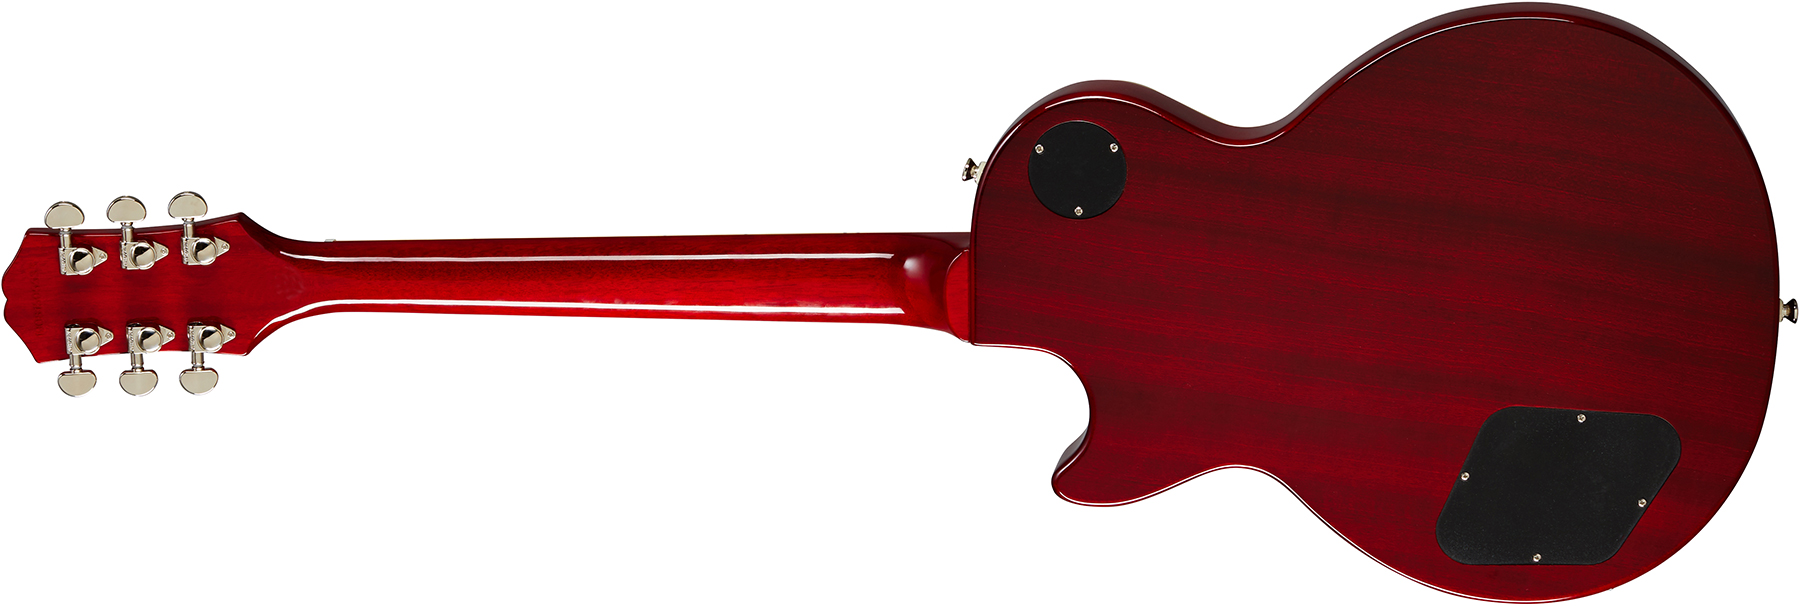 Epiphone Les Paul Standard 60s 2h Ht Rw - Bourbon Burst - Enkel gesneden elektrische gitaar - Variation 1